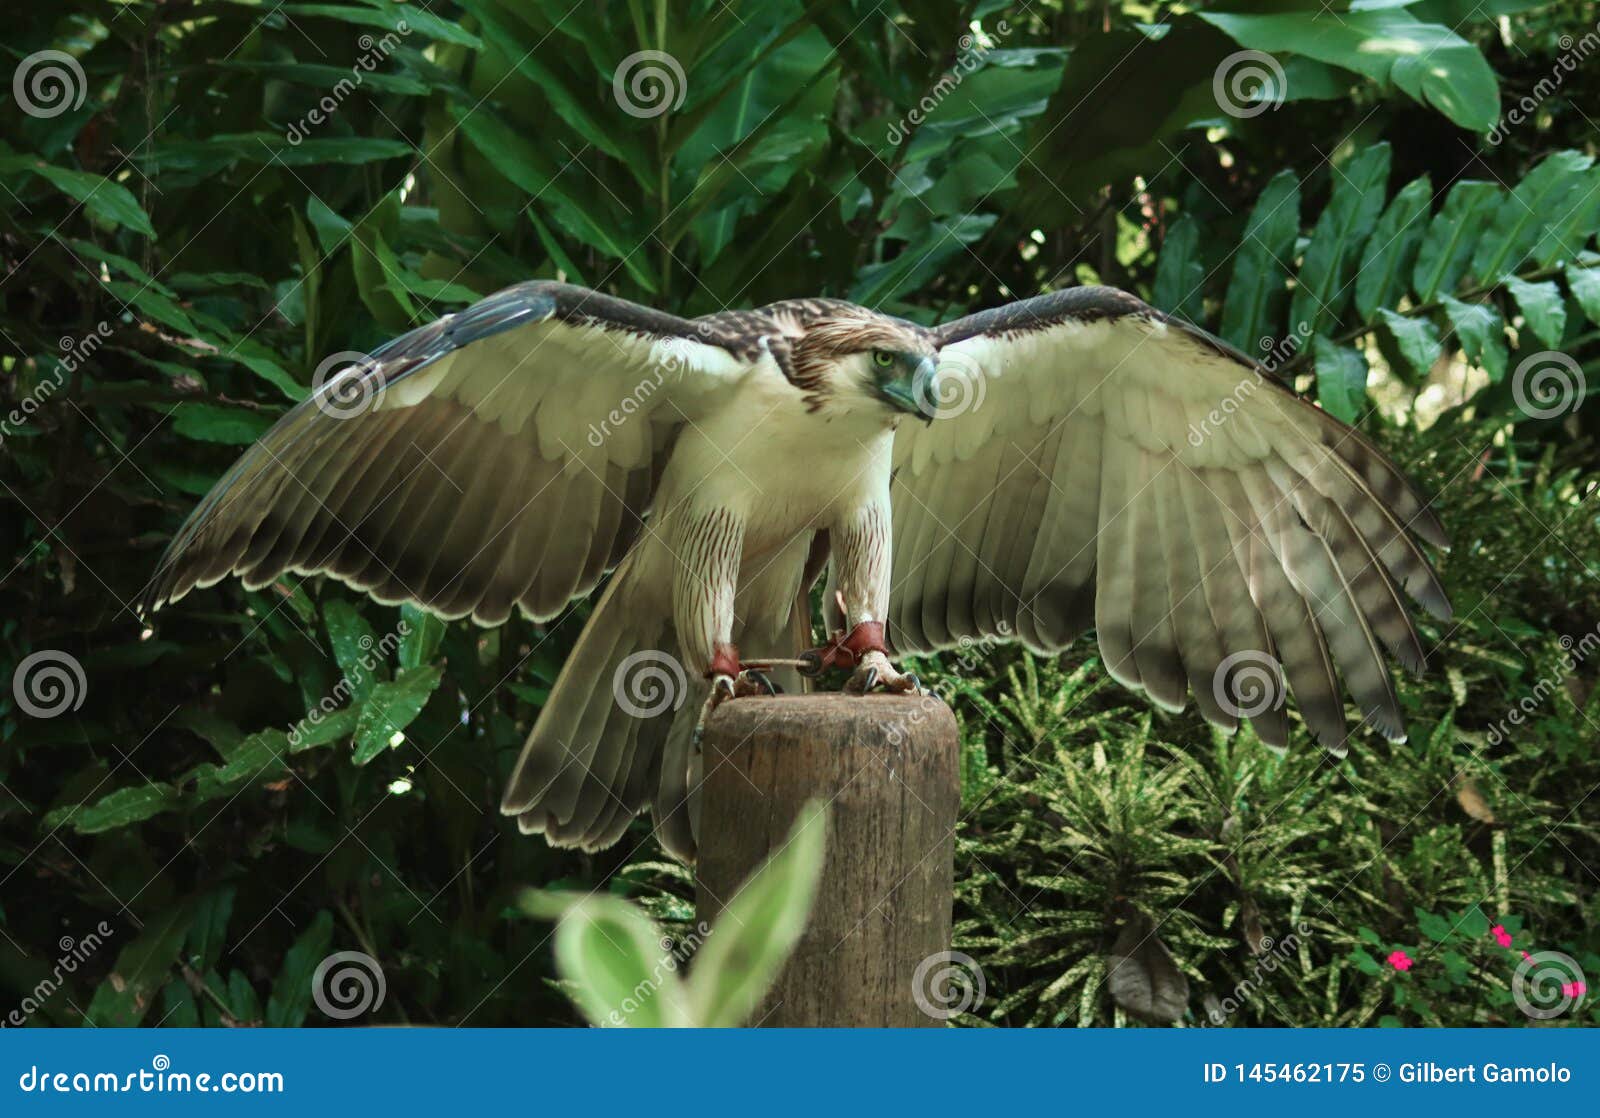 philippine eagle